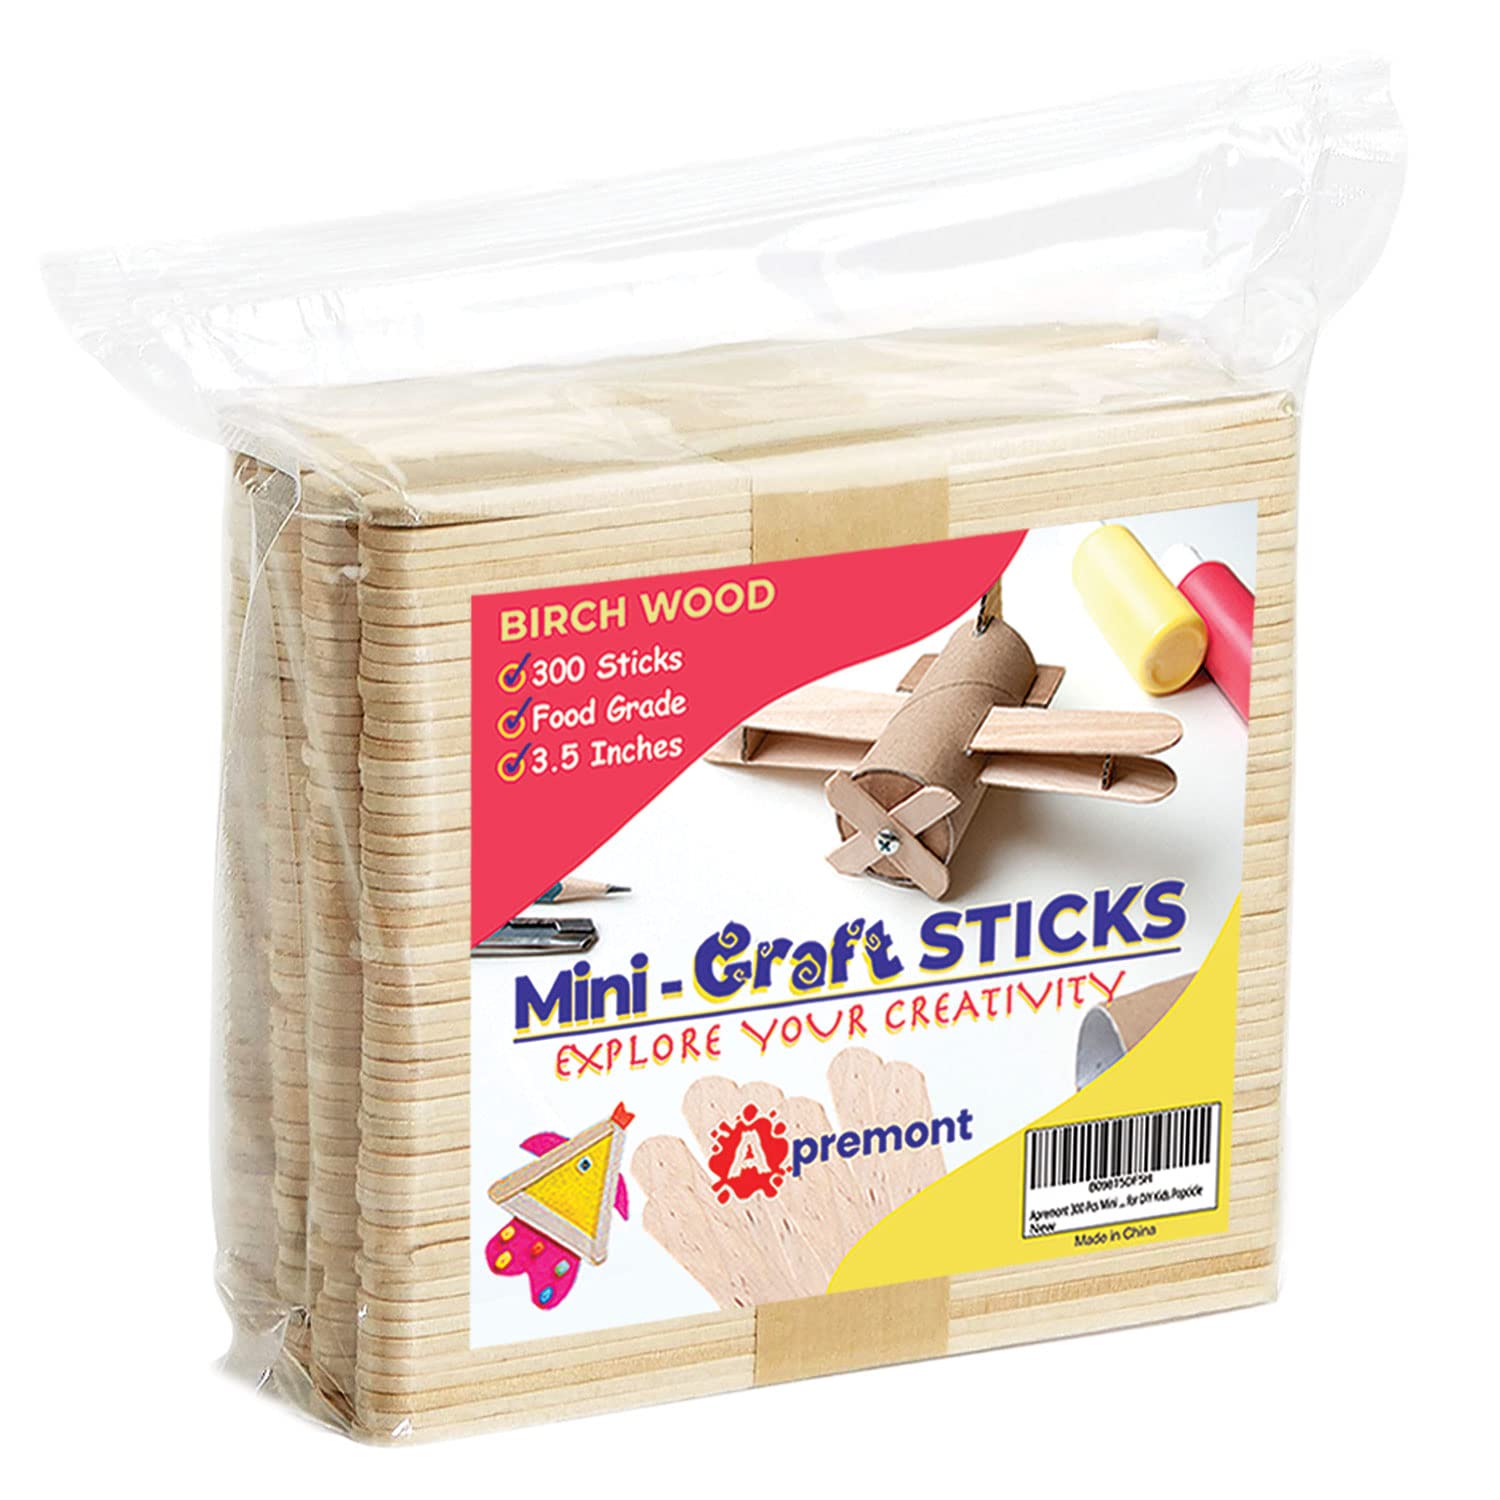 200 Pcs Natural Wooden Food Grade Craft Sticks - Ice Cream Stick